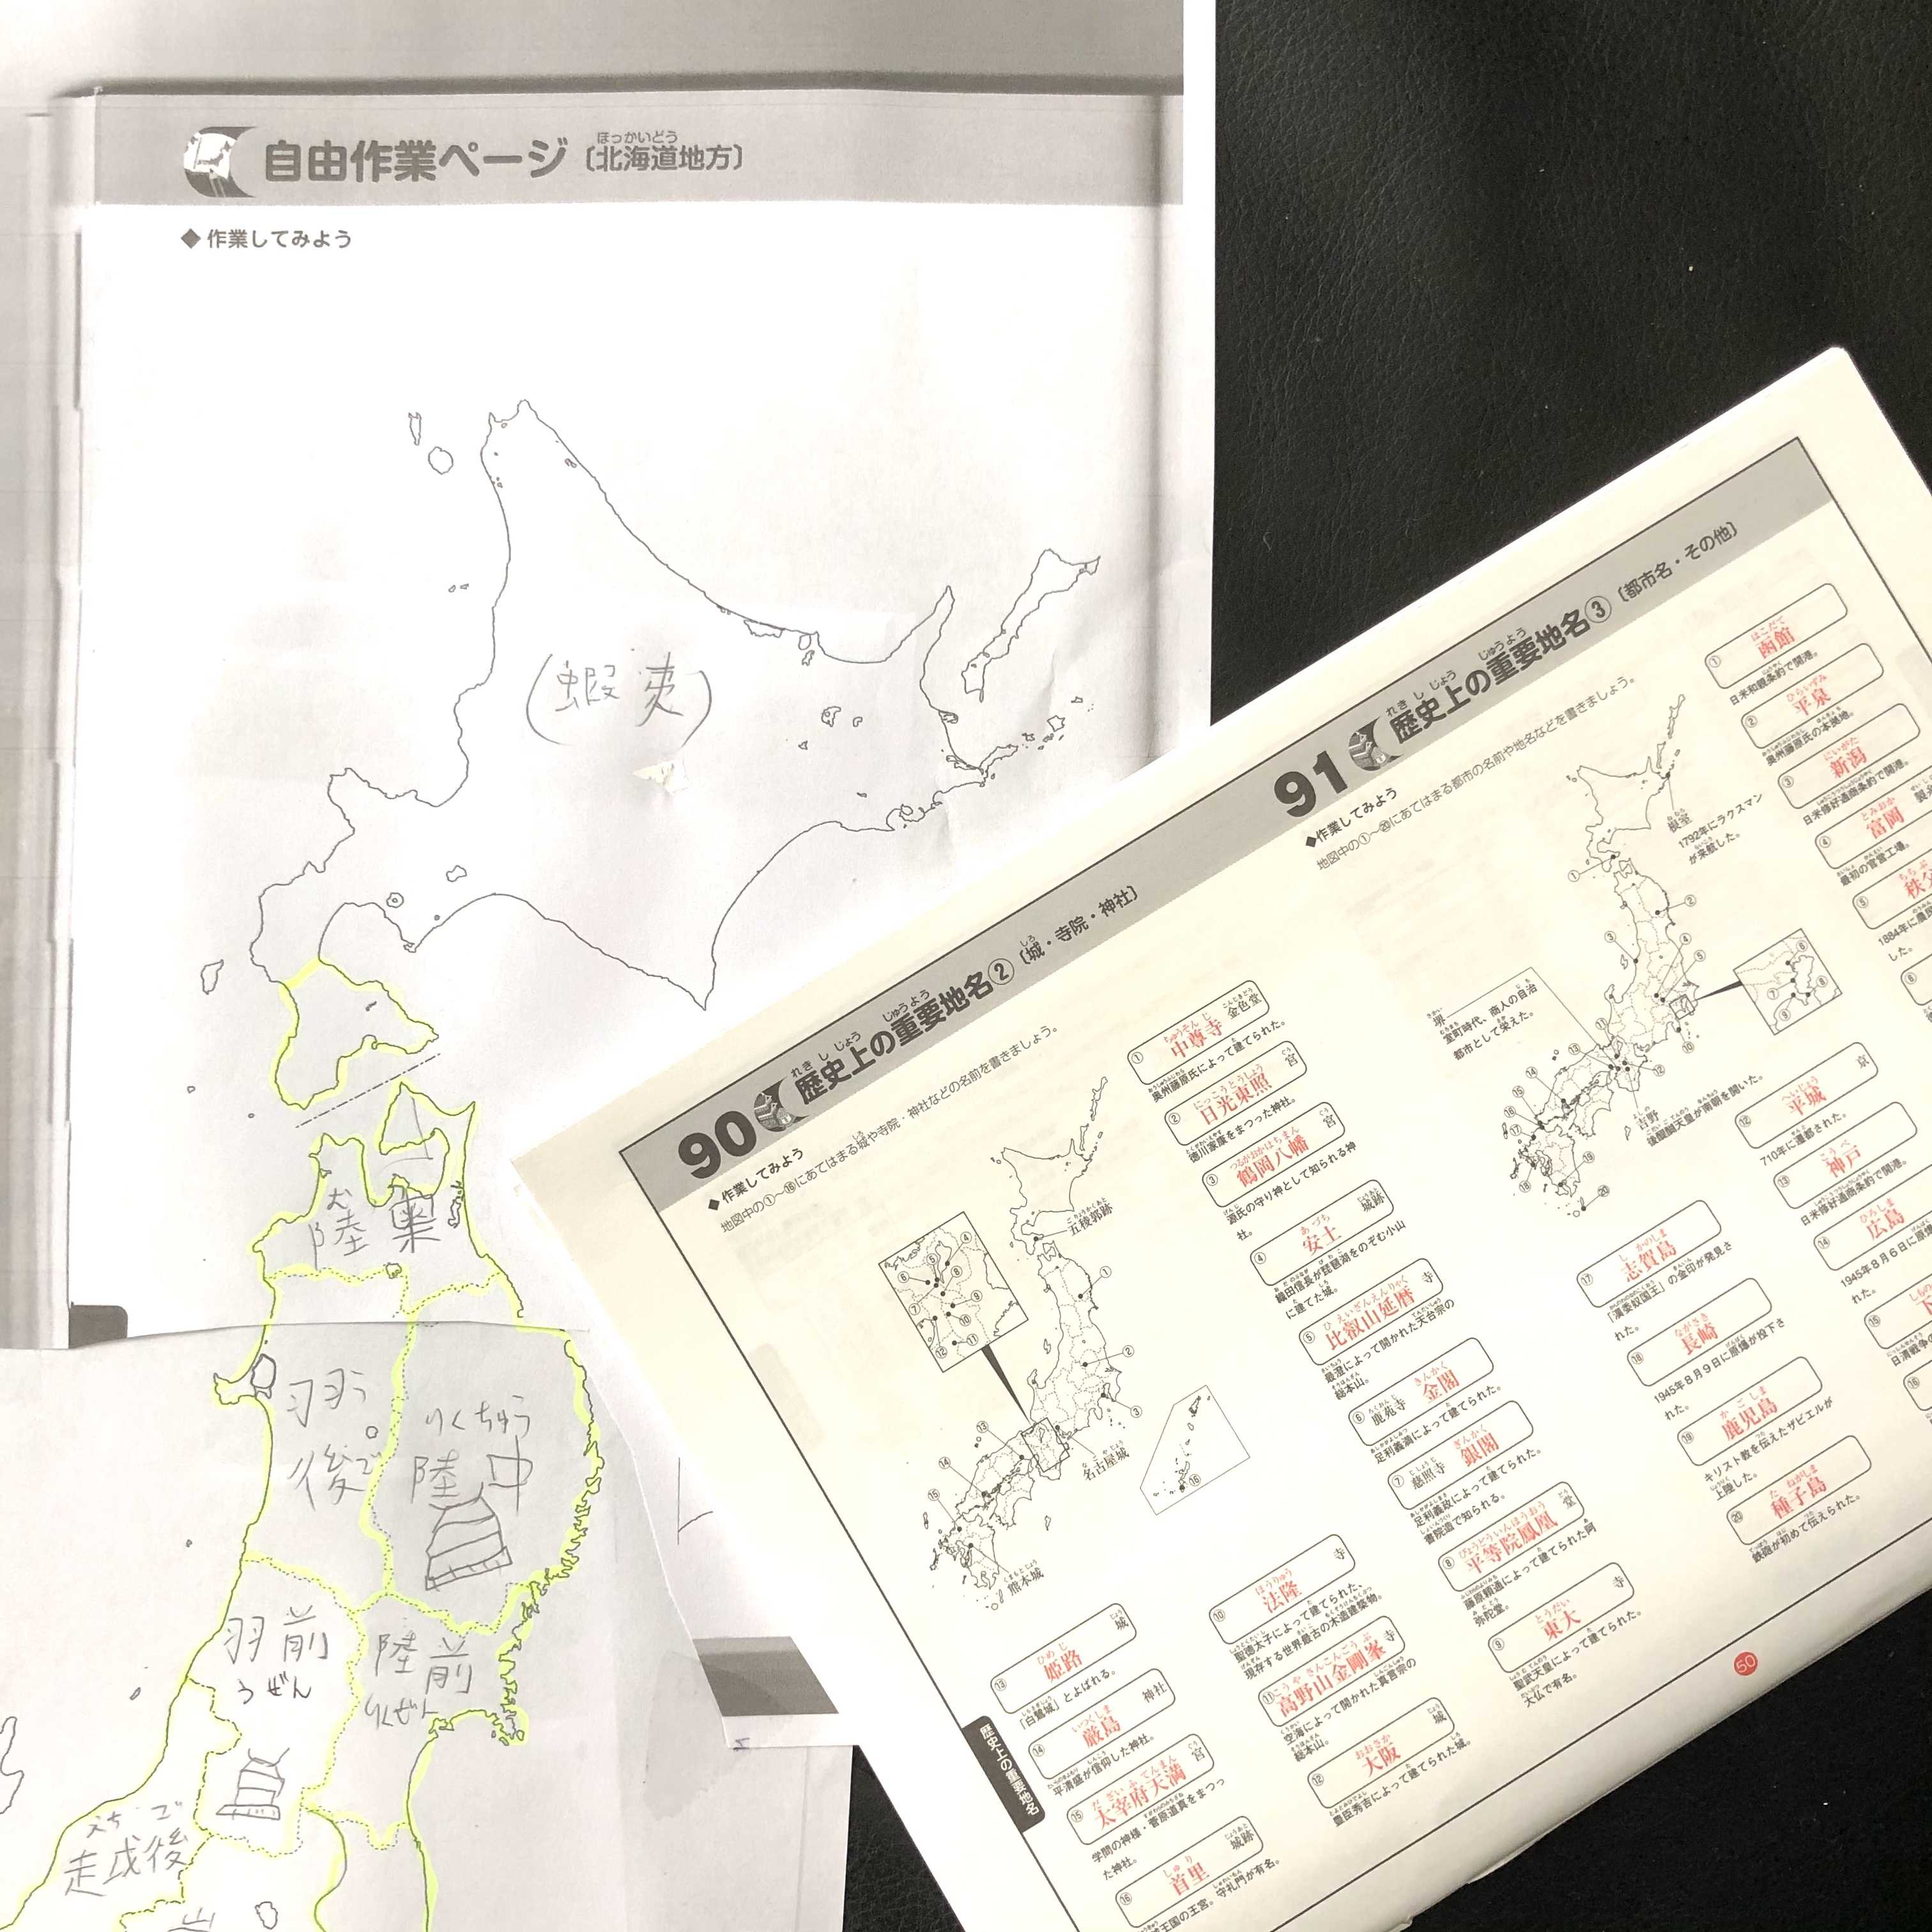 Sapix 白地図トレーニング 92 おもな旧国名 Mamatsuyukoのブログ 楽天ブログ